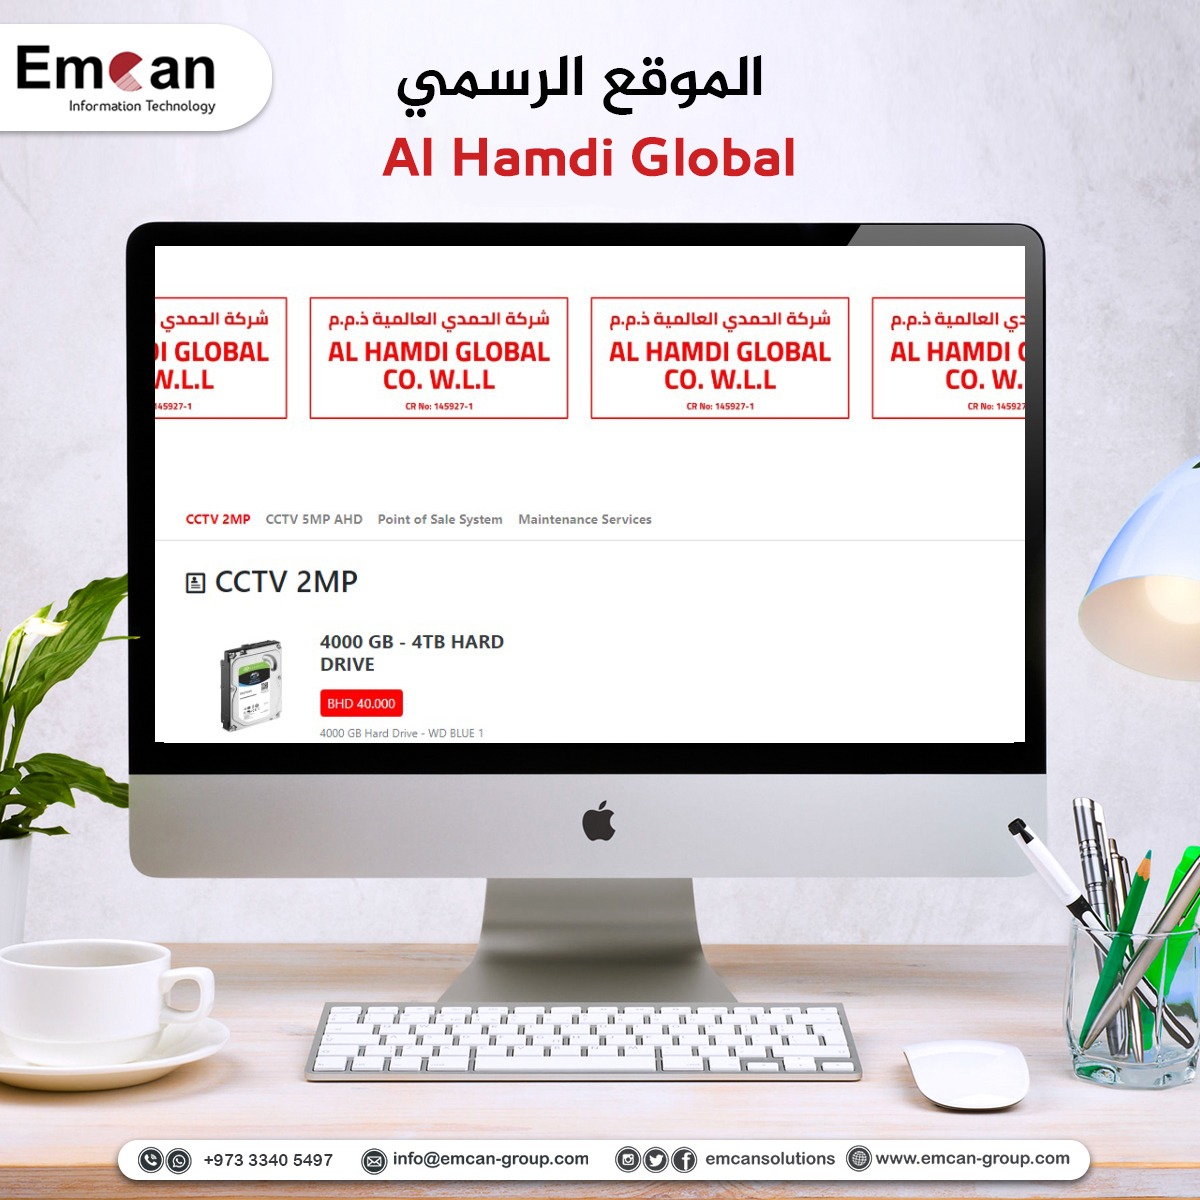 Al Hamdi Global website